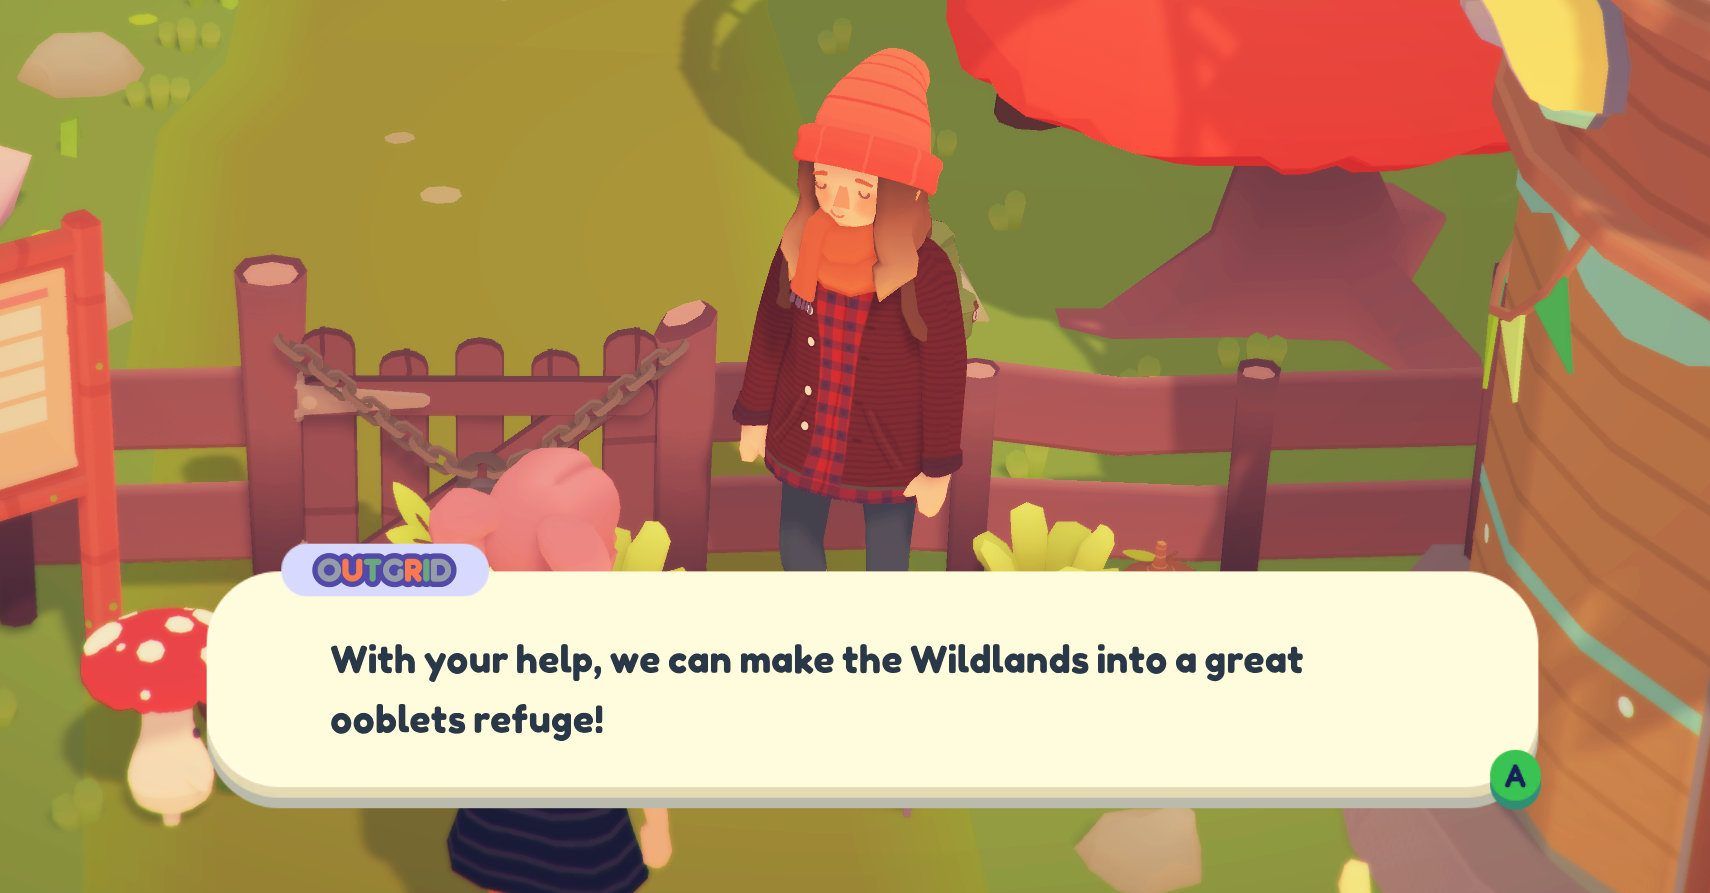 Outgrid talking about wildlands being a refuge.